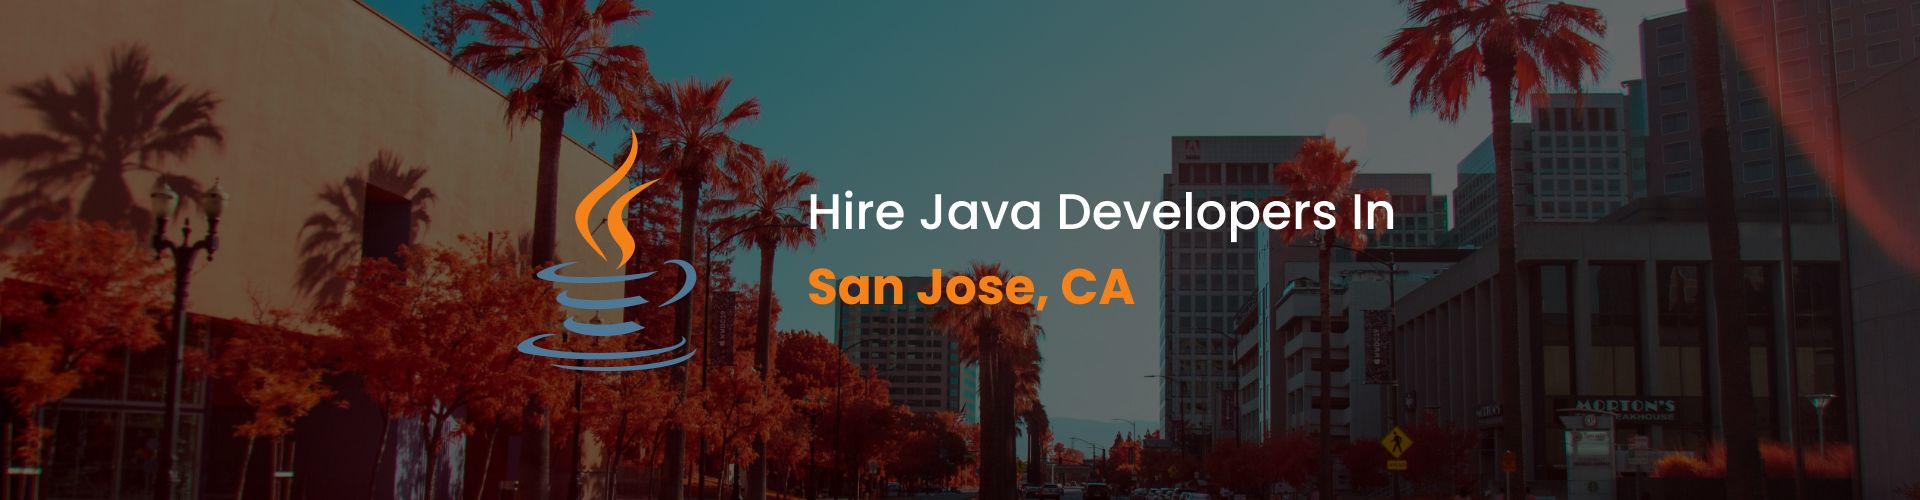 hire java developers in san jose